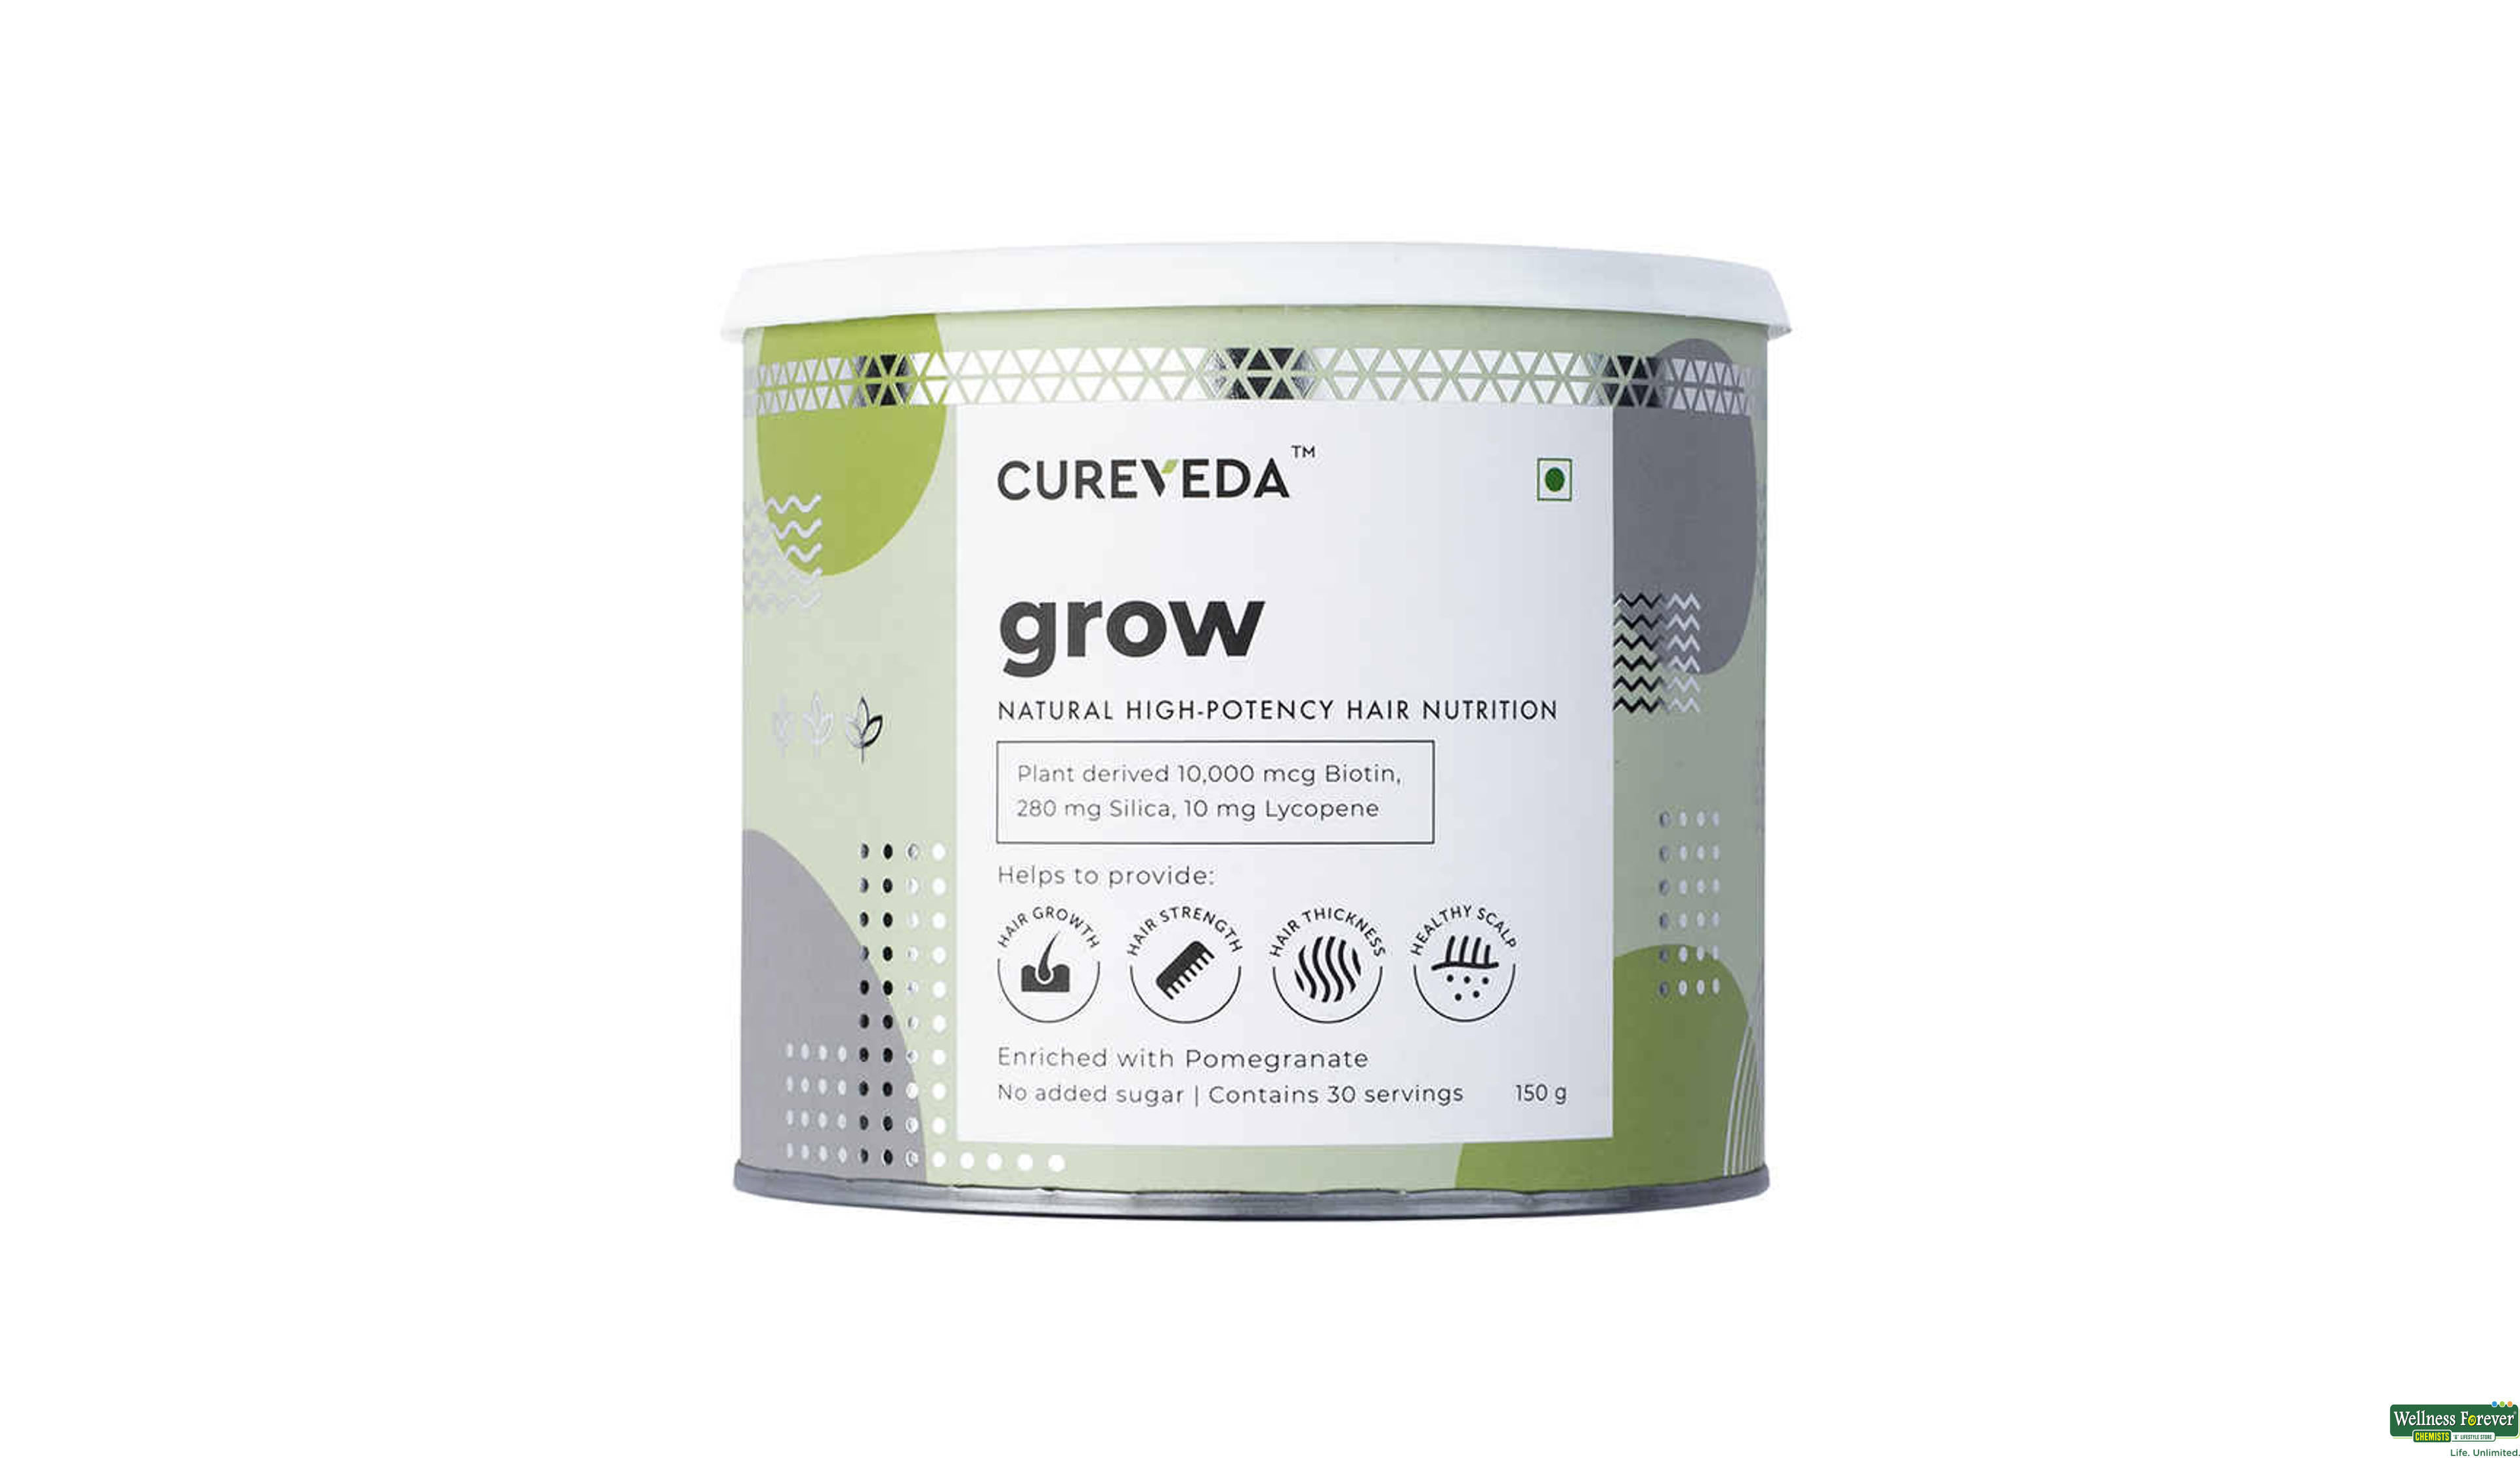 CUREVEDA GROW HIGH-POT HAIR NUTRI 150GM- 1, 150GM, 